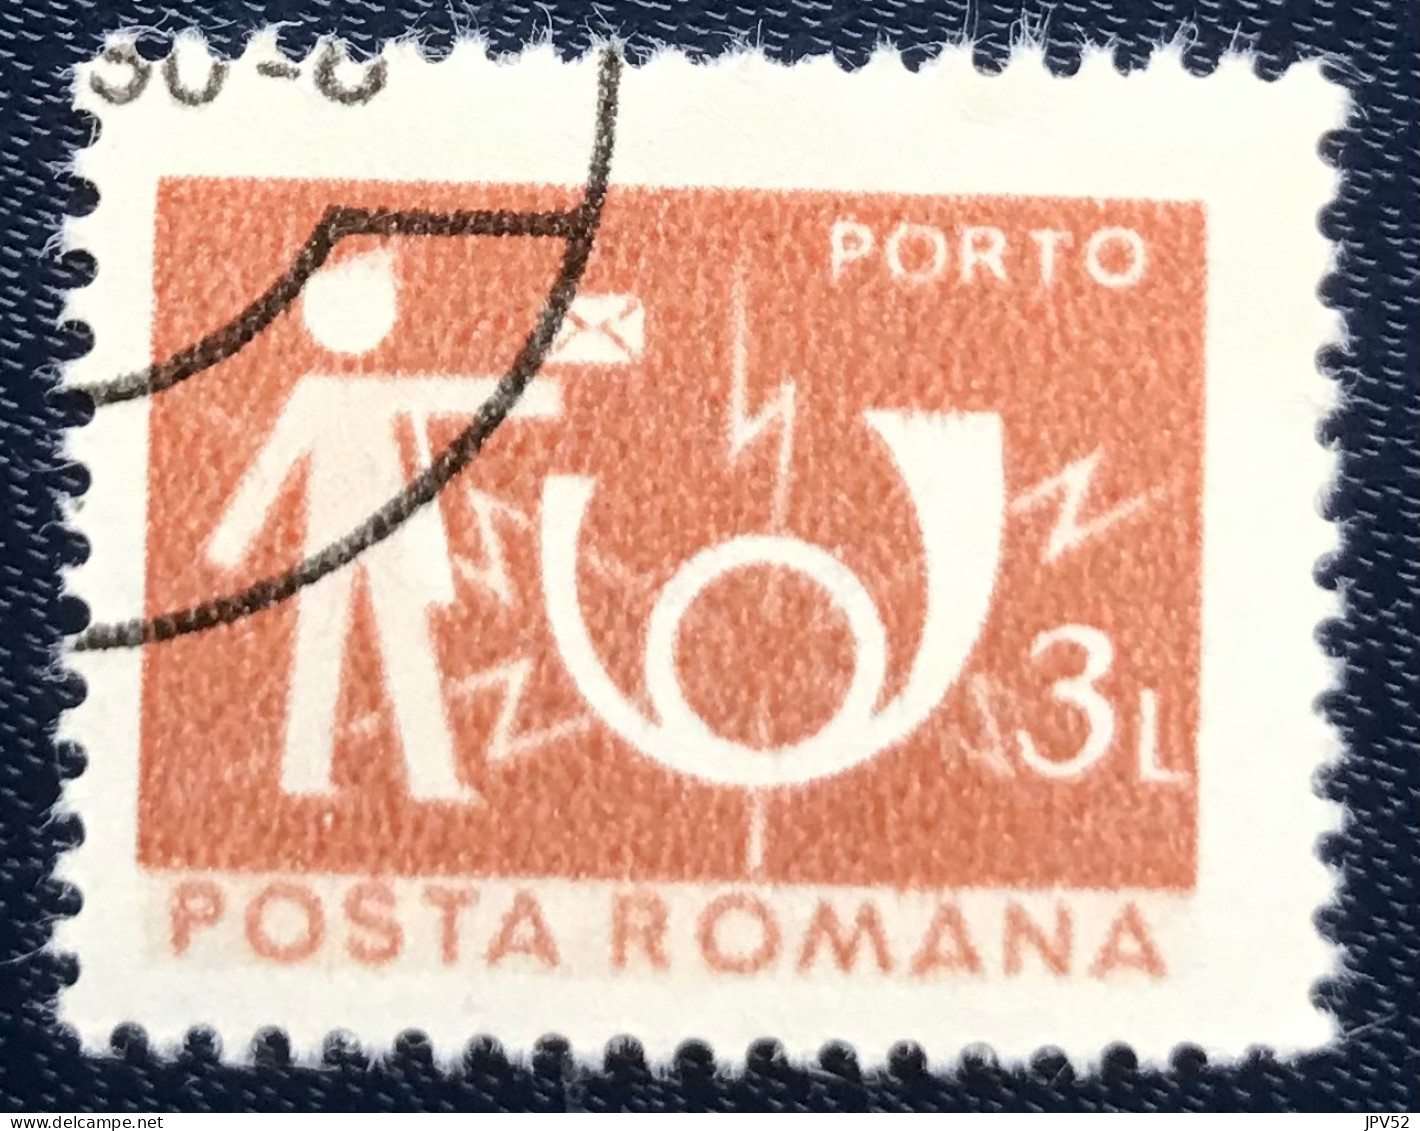 Romana - Roemenië - C14/53 - 1982 - (°)used - Michel 129 - Postbode & Posthoorn - Strafport